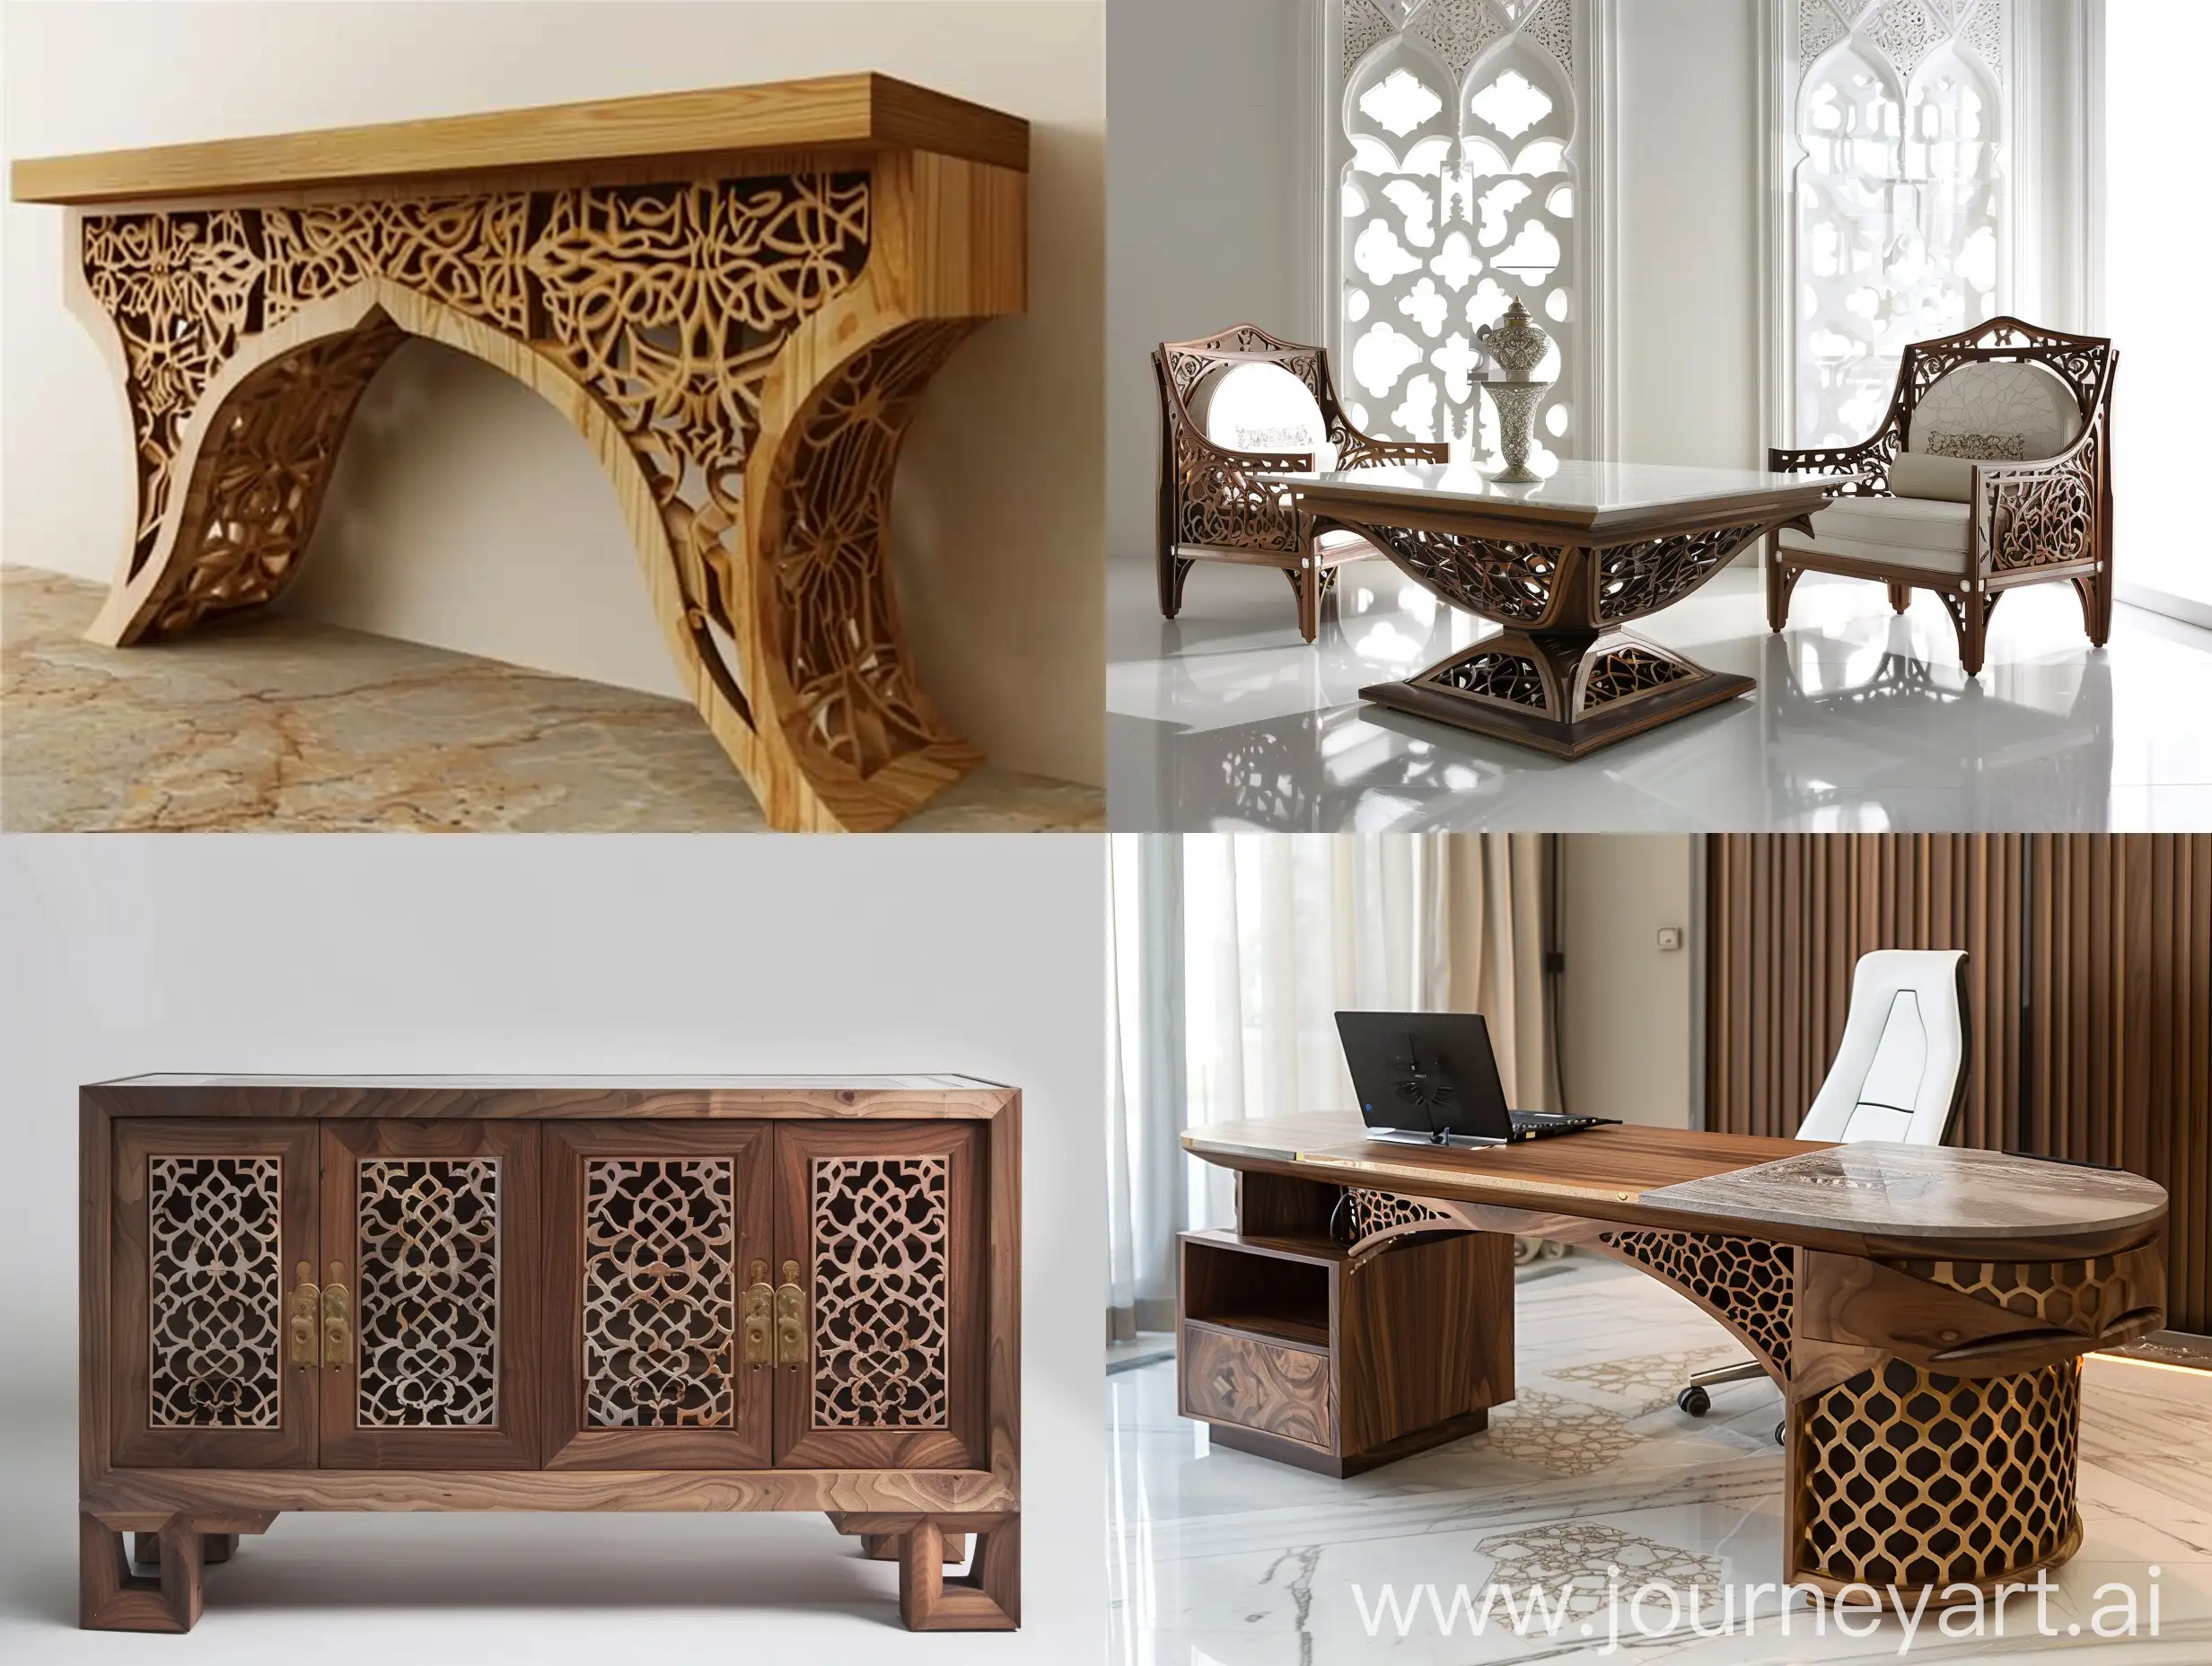 Furniture design, islamic inspiration